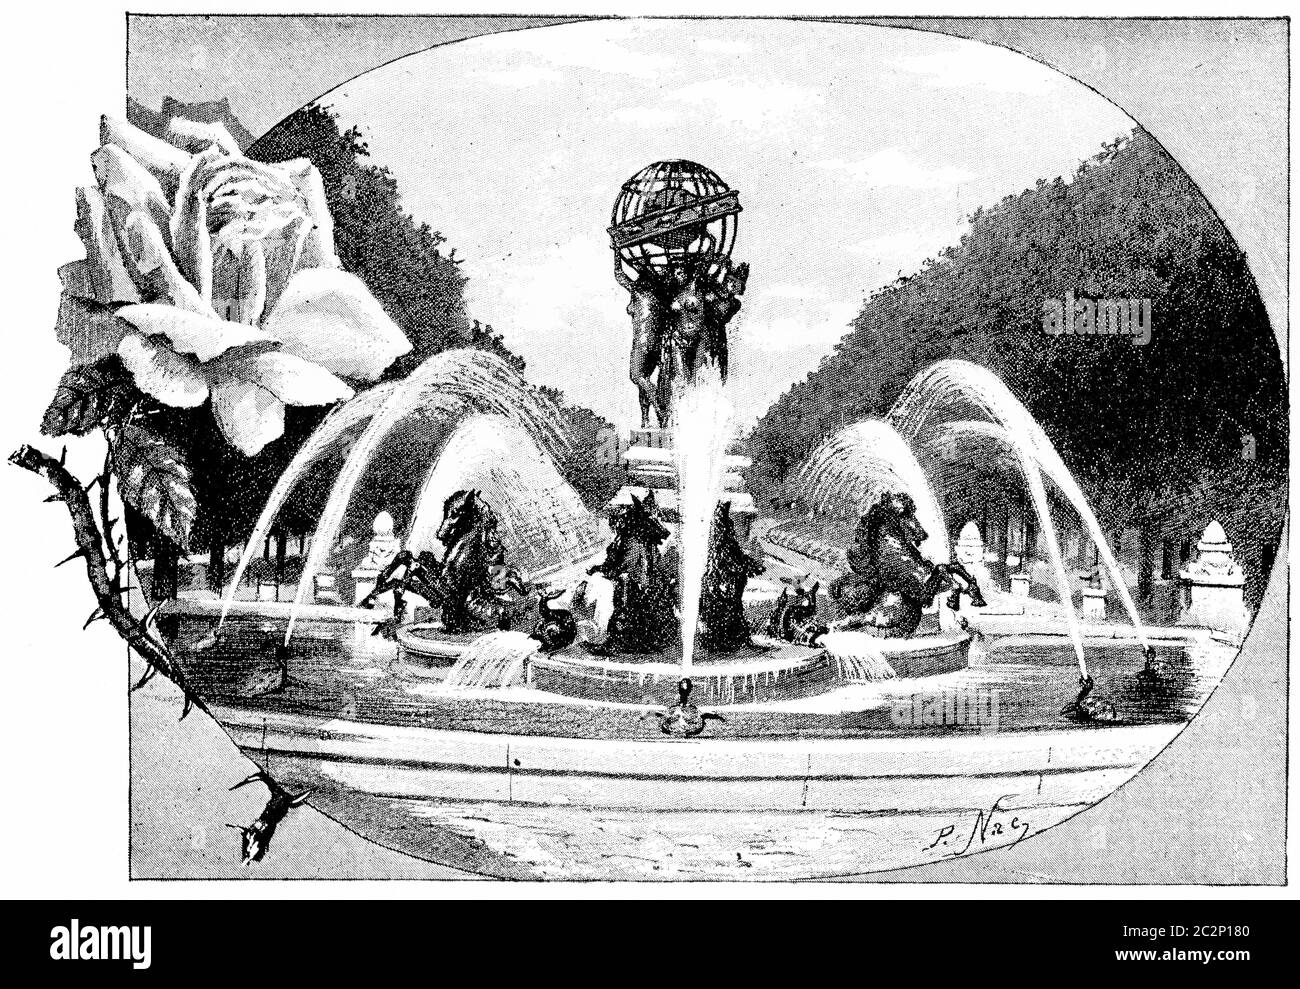 Fontana Fremiet e Carpeaux, illustrazione vintage incisa. Parigi - Auguste VITU – 1890. Foto Stock